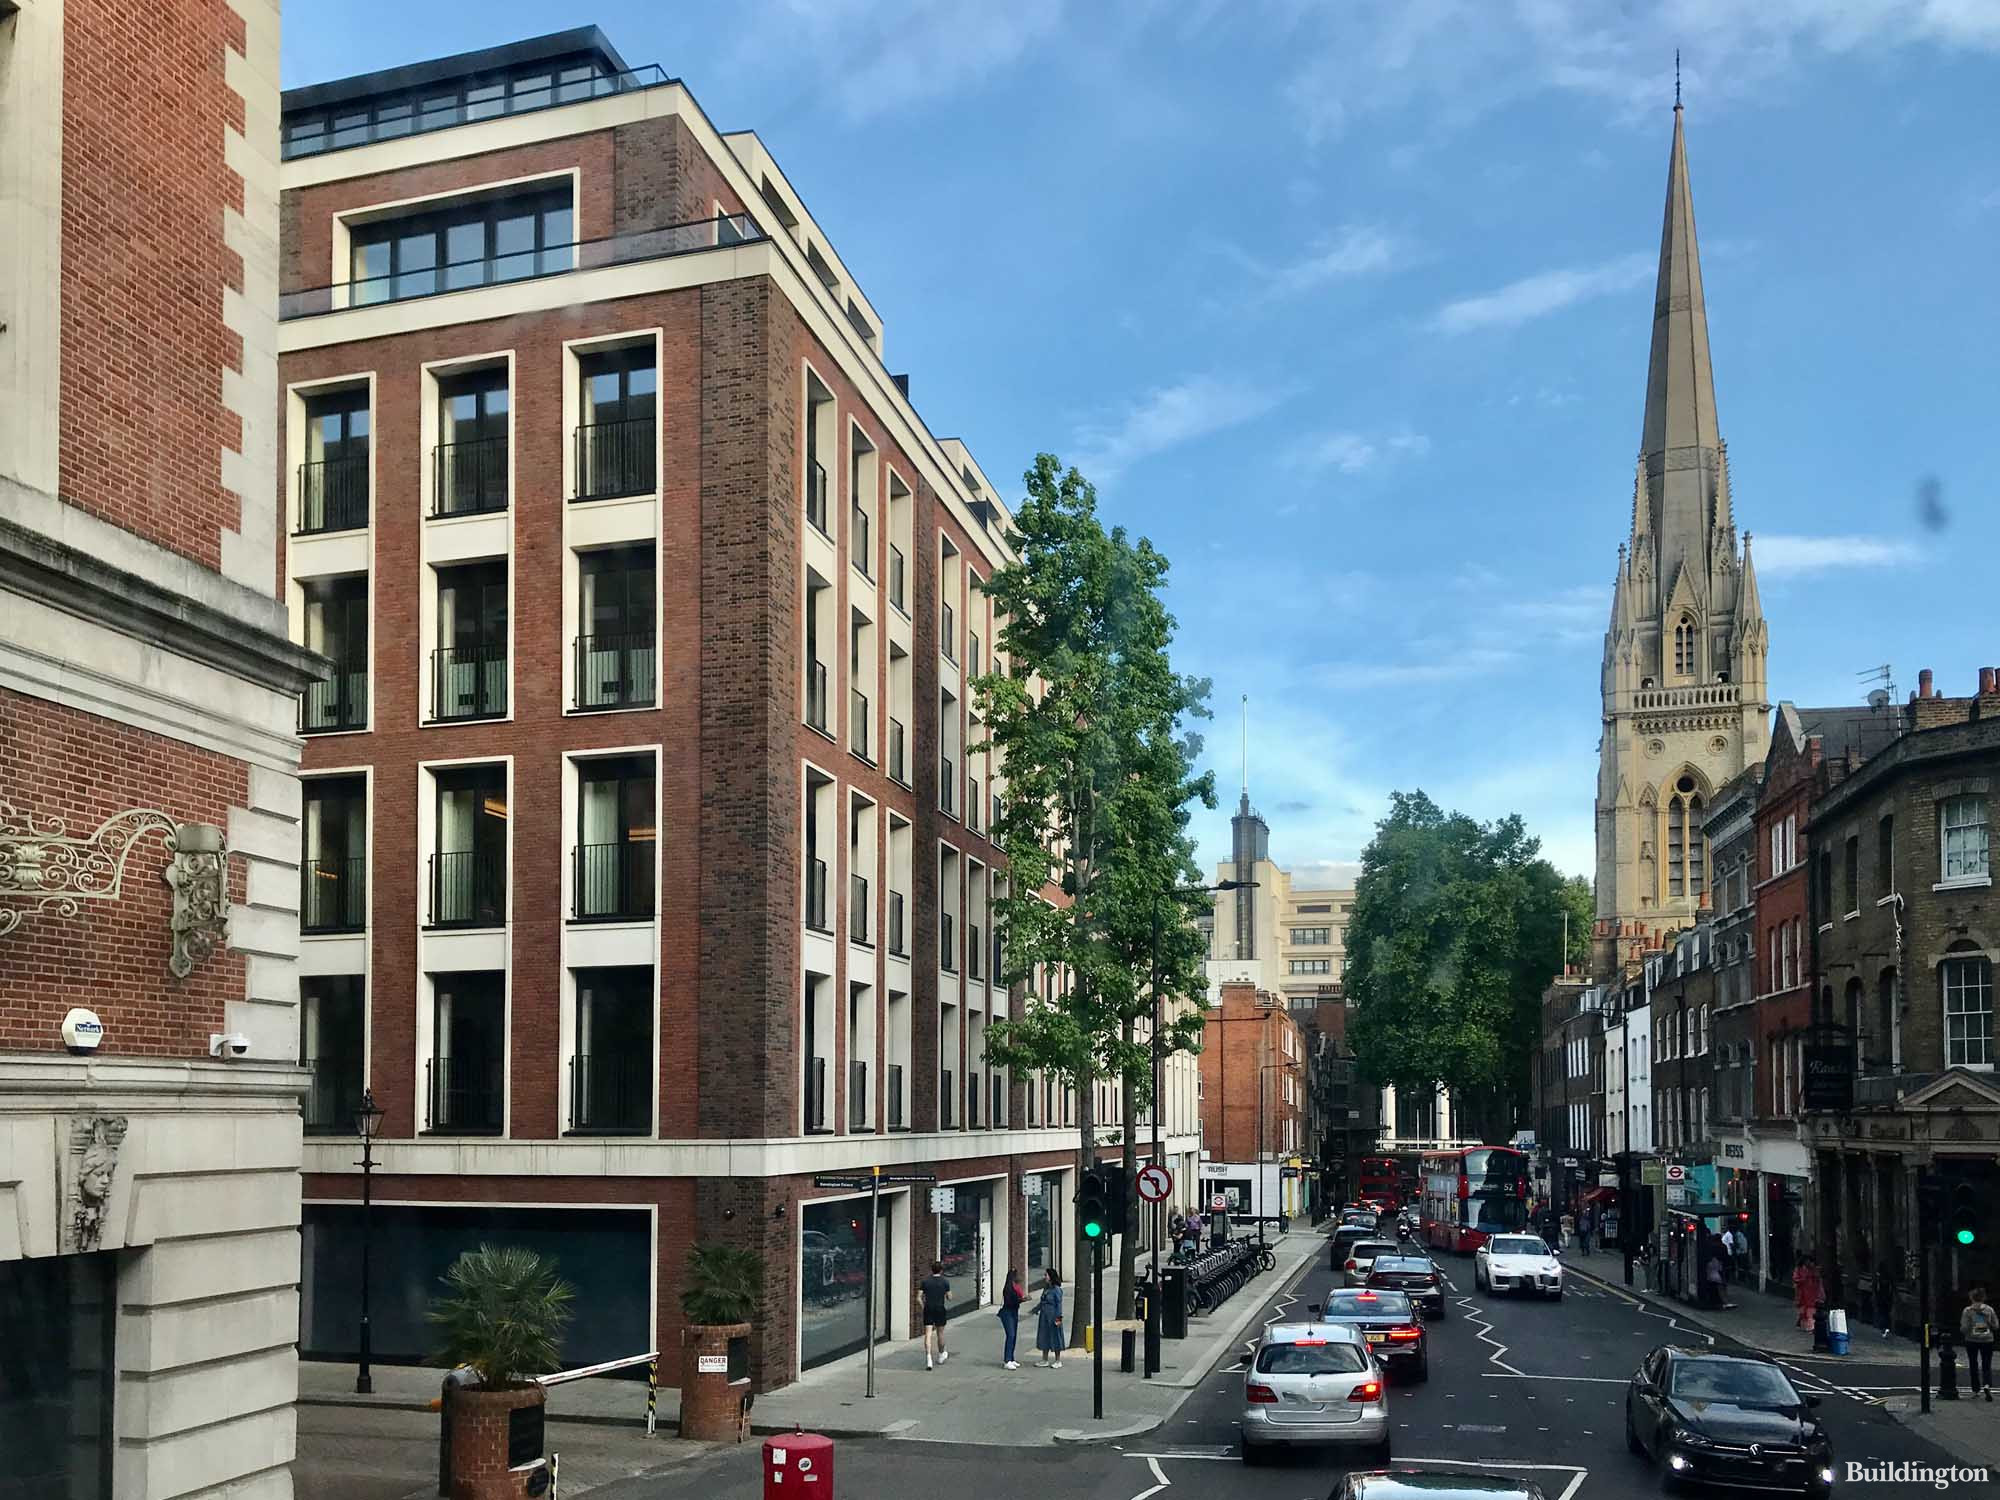 Lancer Square development on Kensington Church Street in Kensington, London W8